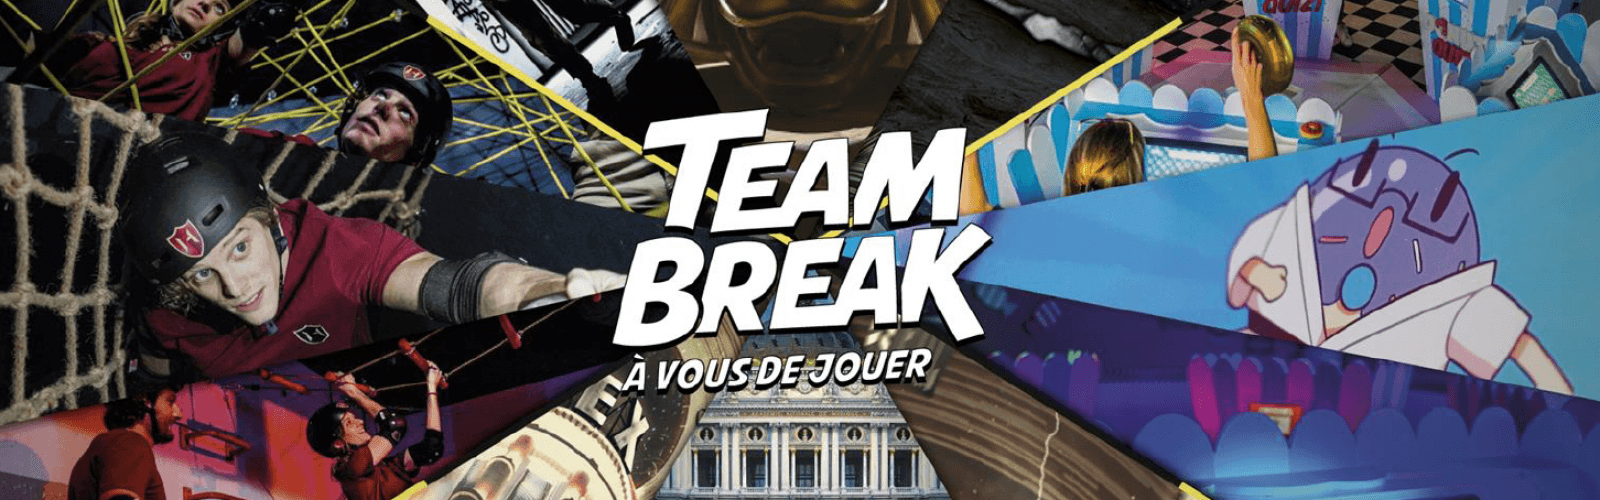 Team Break Aéroville